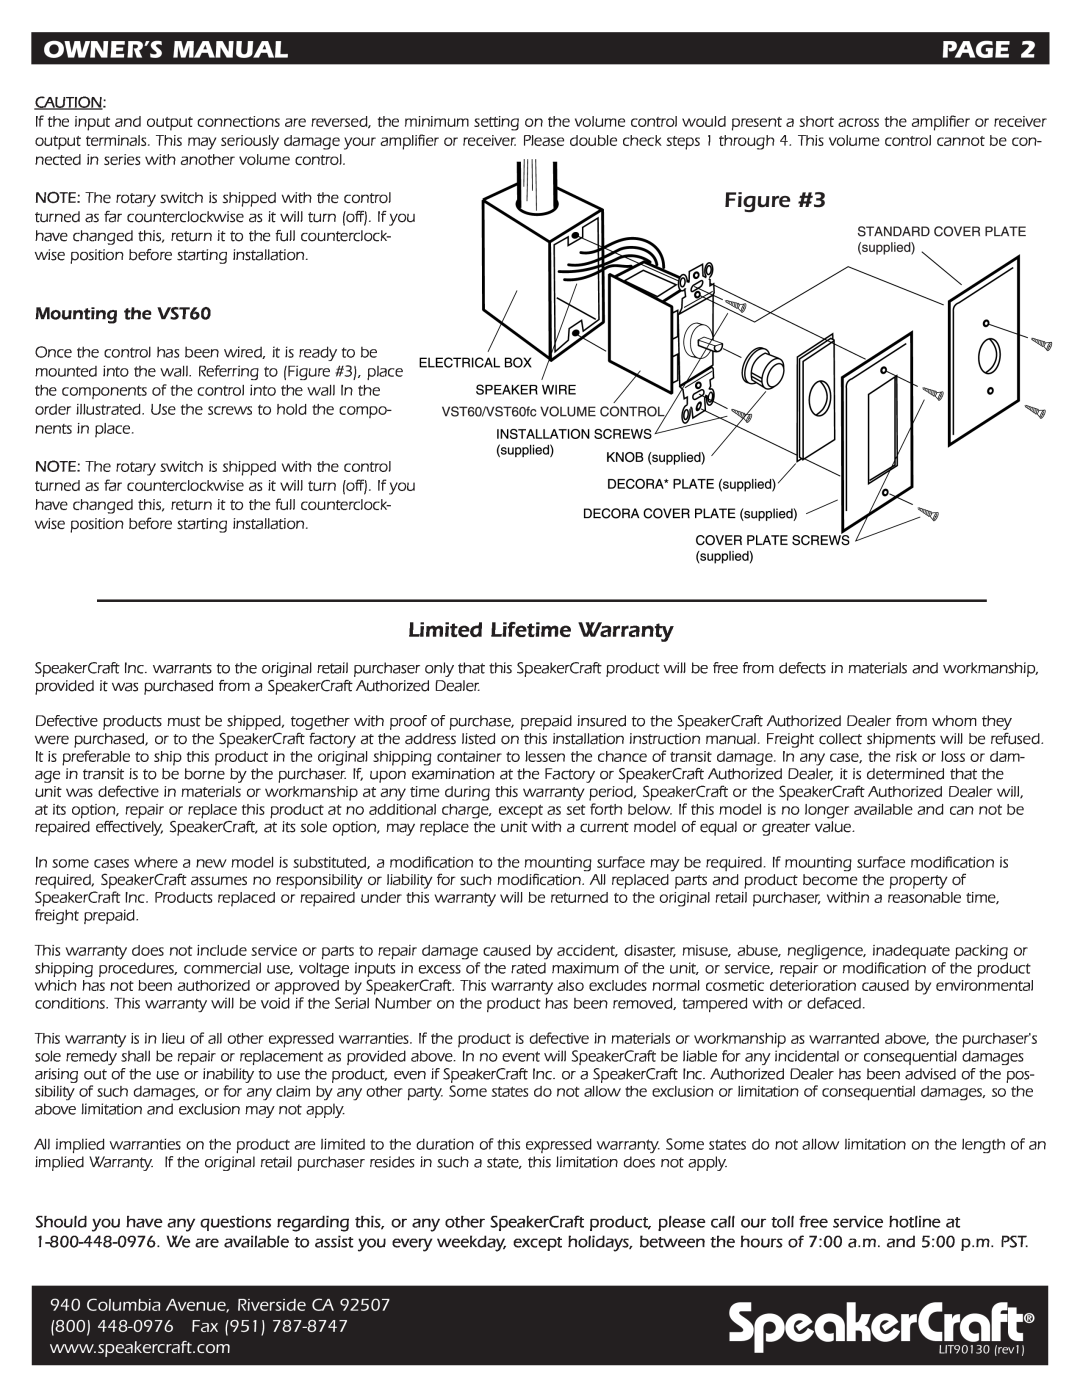 SpeakerCraft VST60 owner manual Limited Lifetime Warranty, SpeakerCraft, Page, Figure #3, Columbia Avenue, Riverside CA 